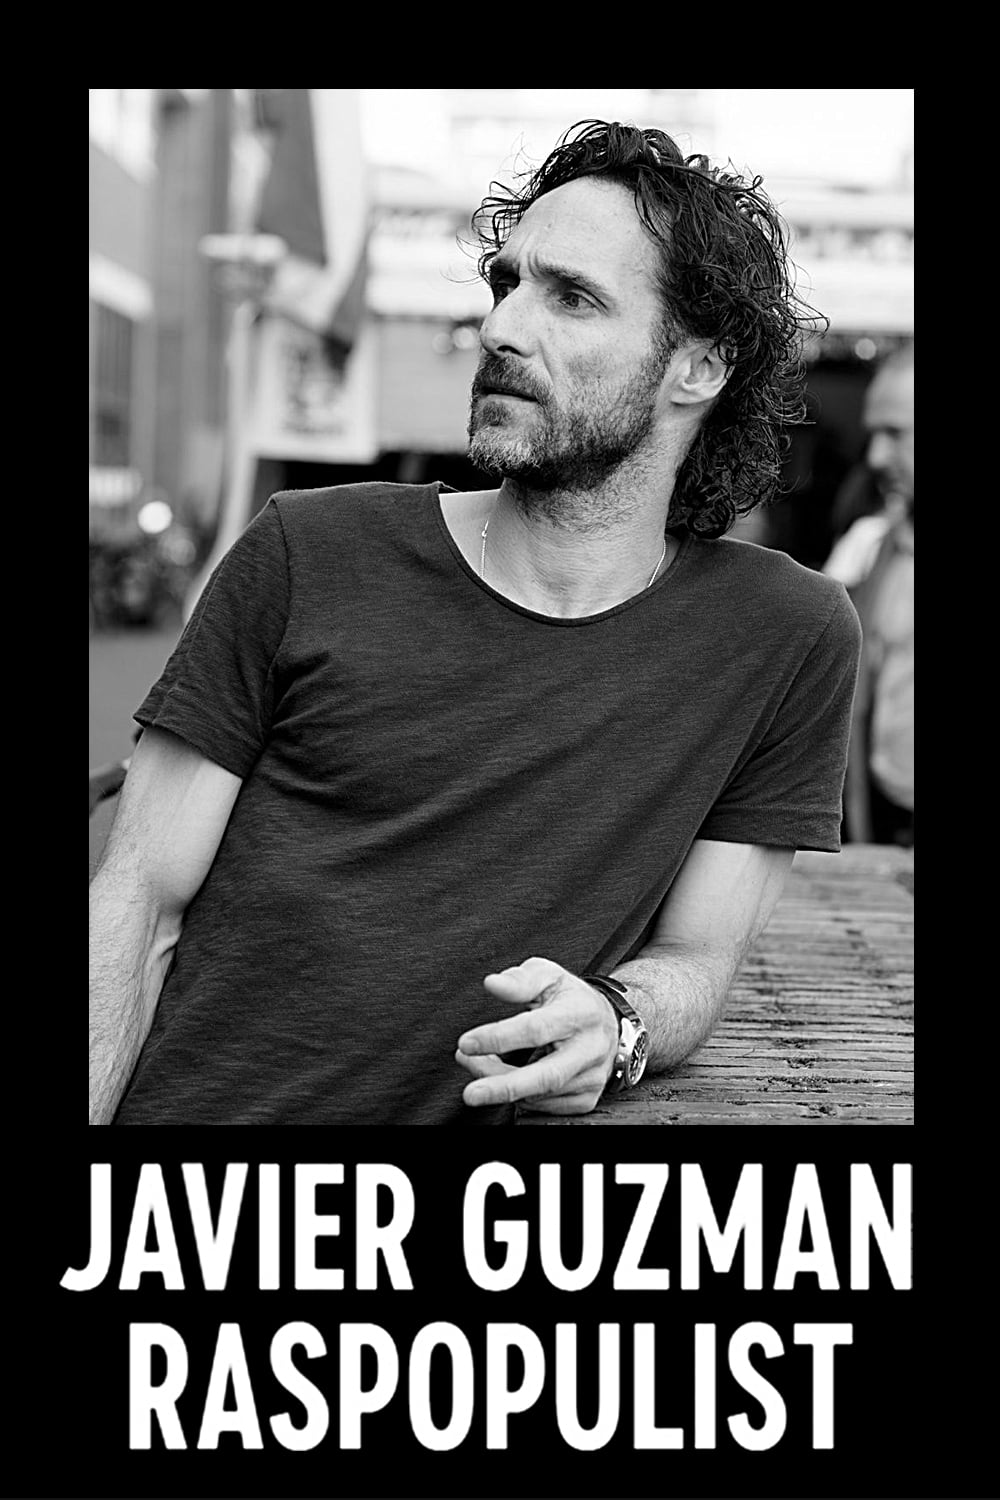 Javier Guzman: Oudejaarsconference 2020: Raspopulist